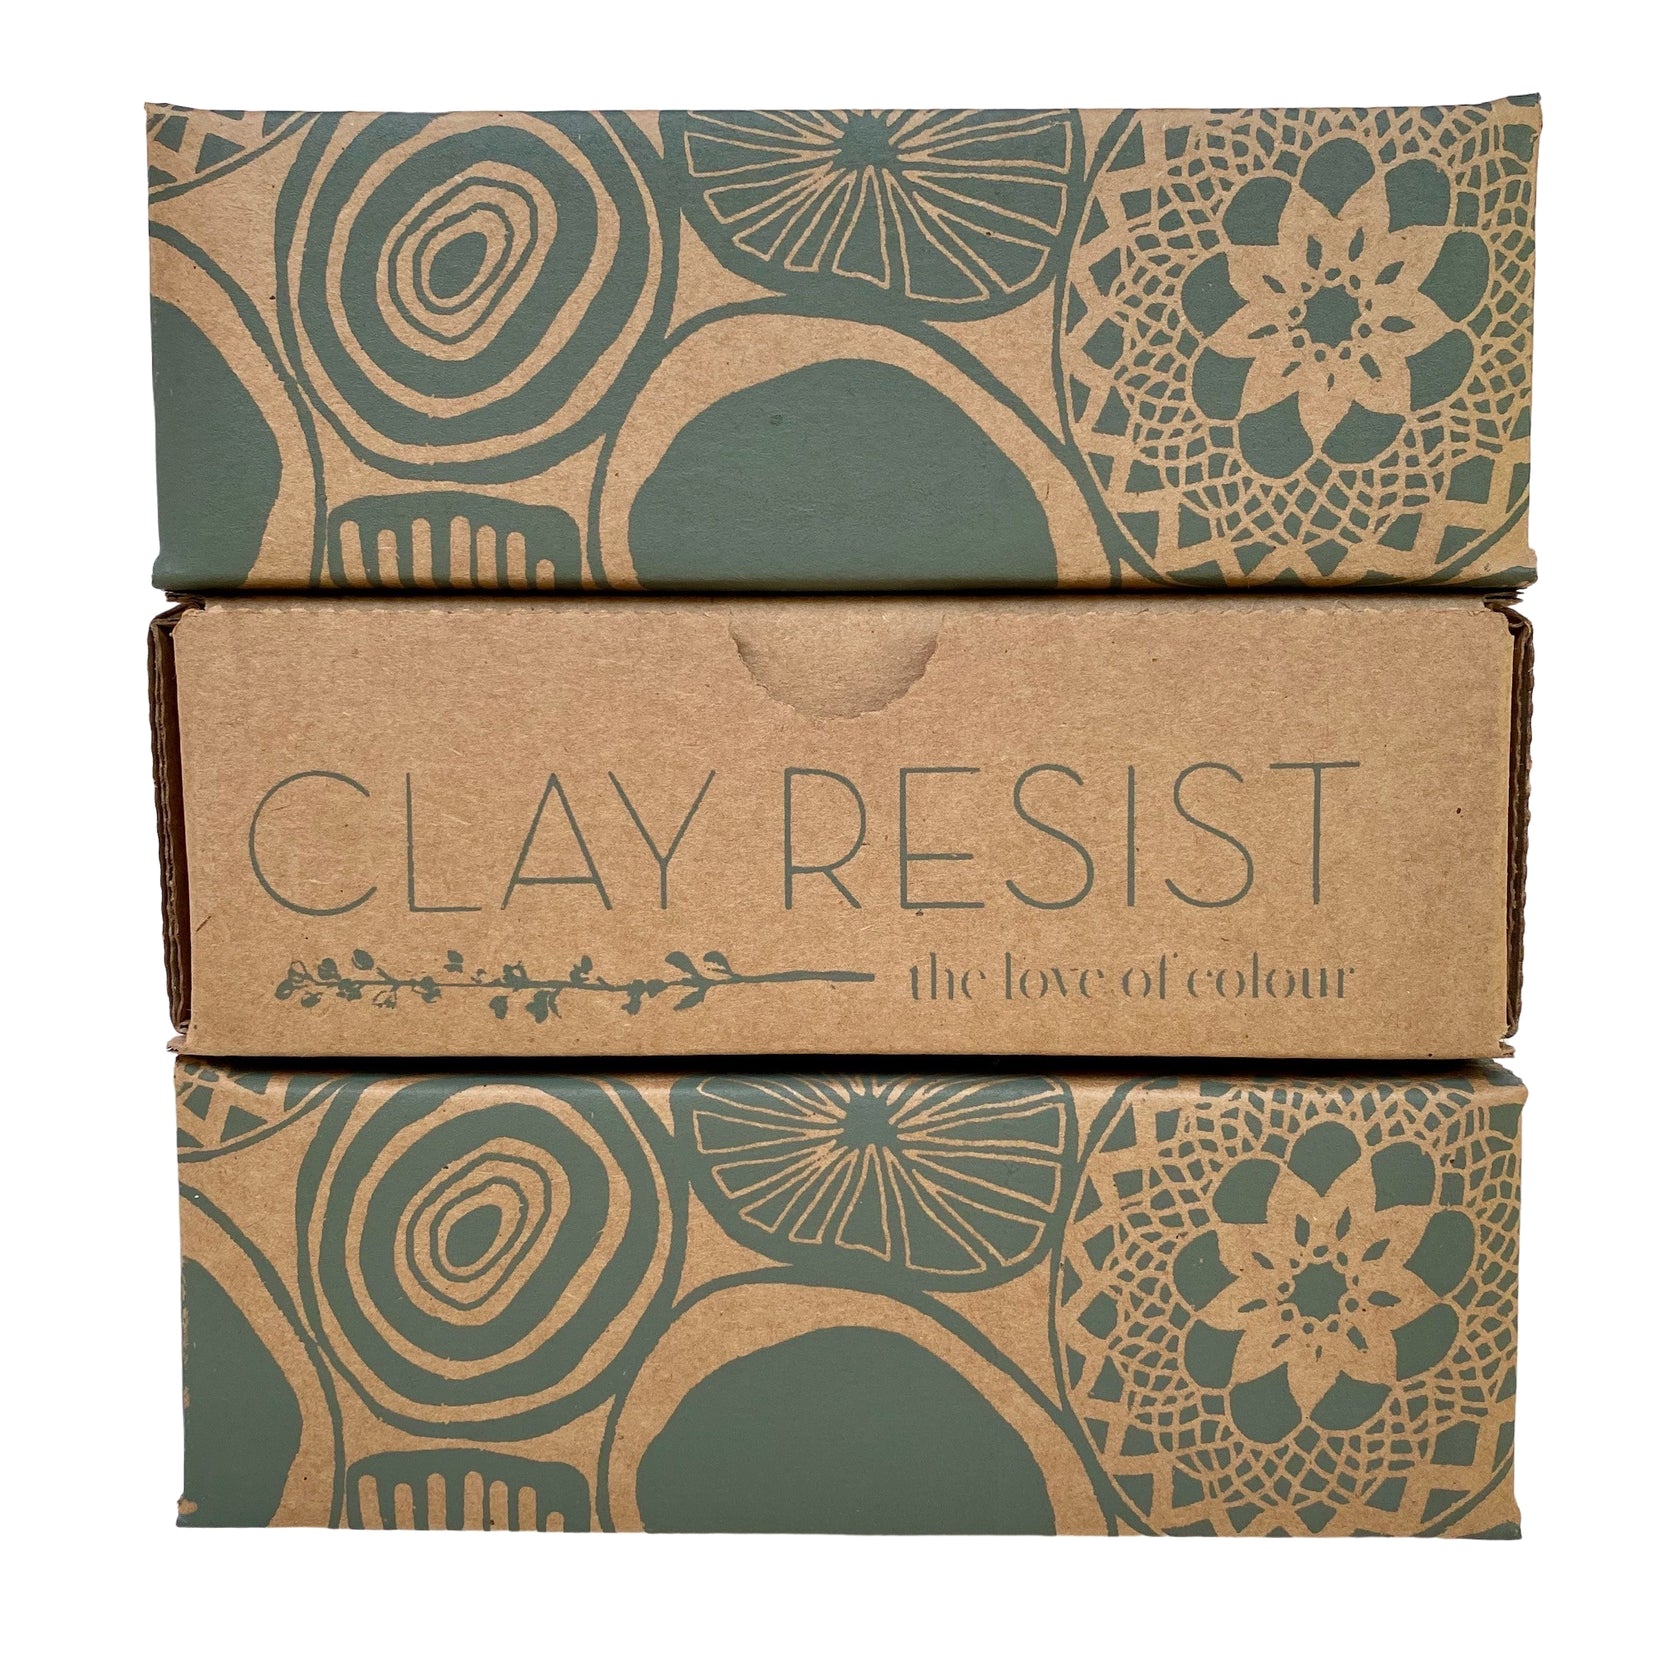 TLOC - Clay Resist Kit